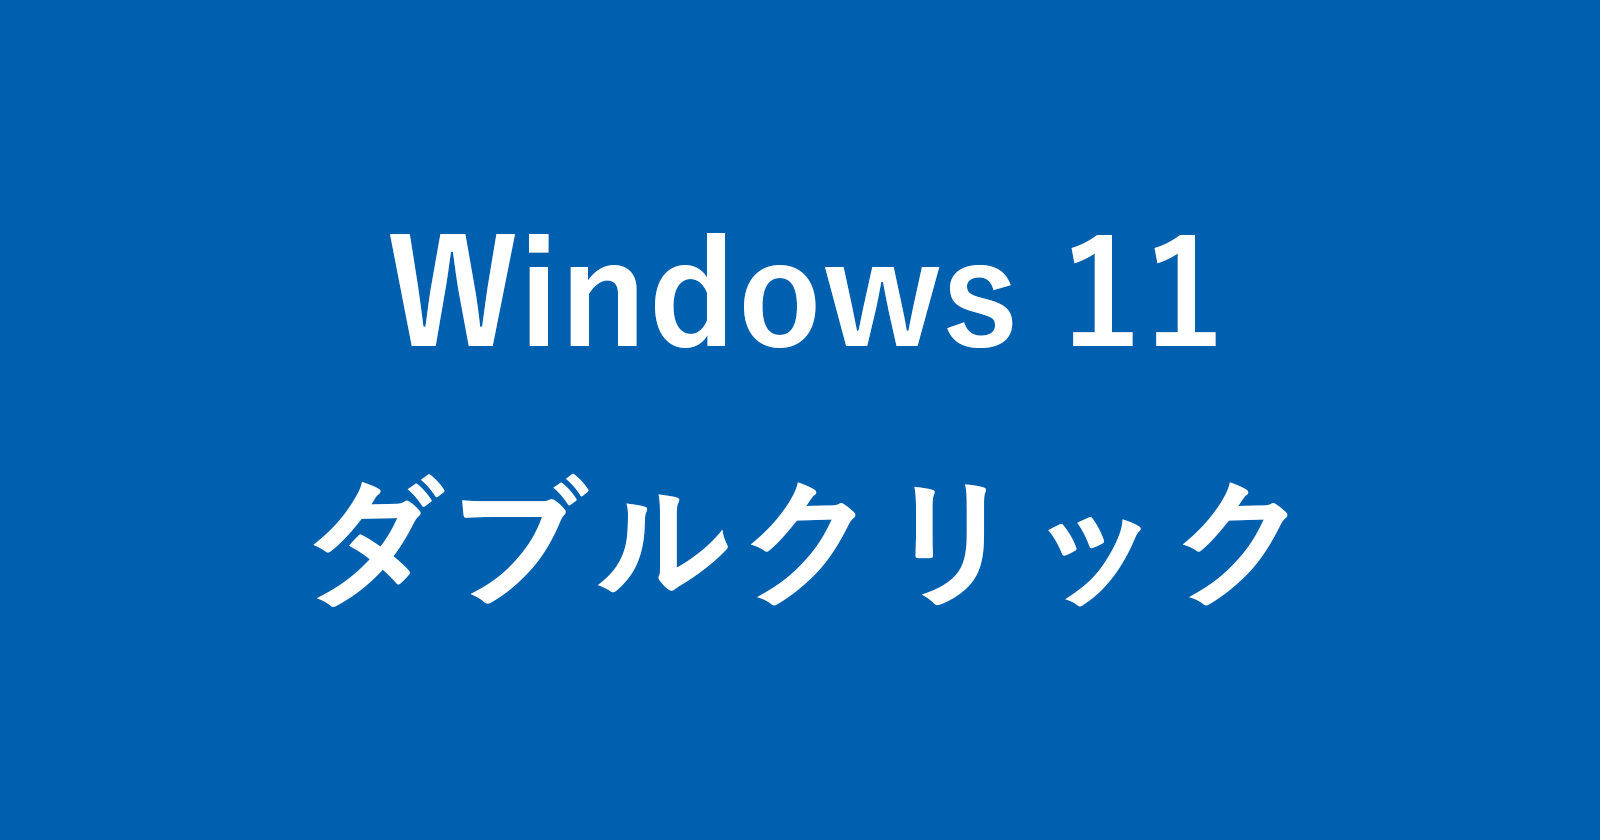 windows 11 double click